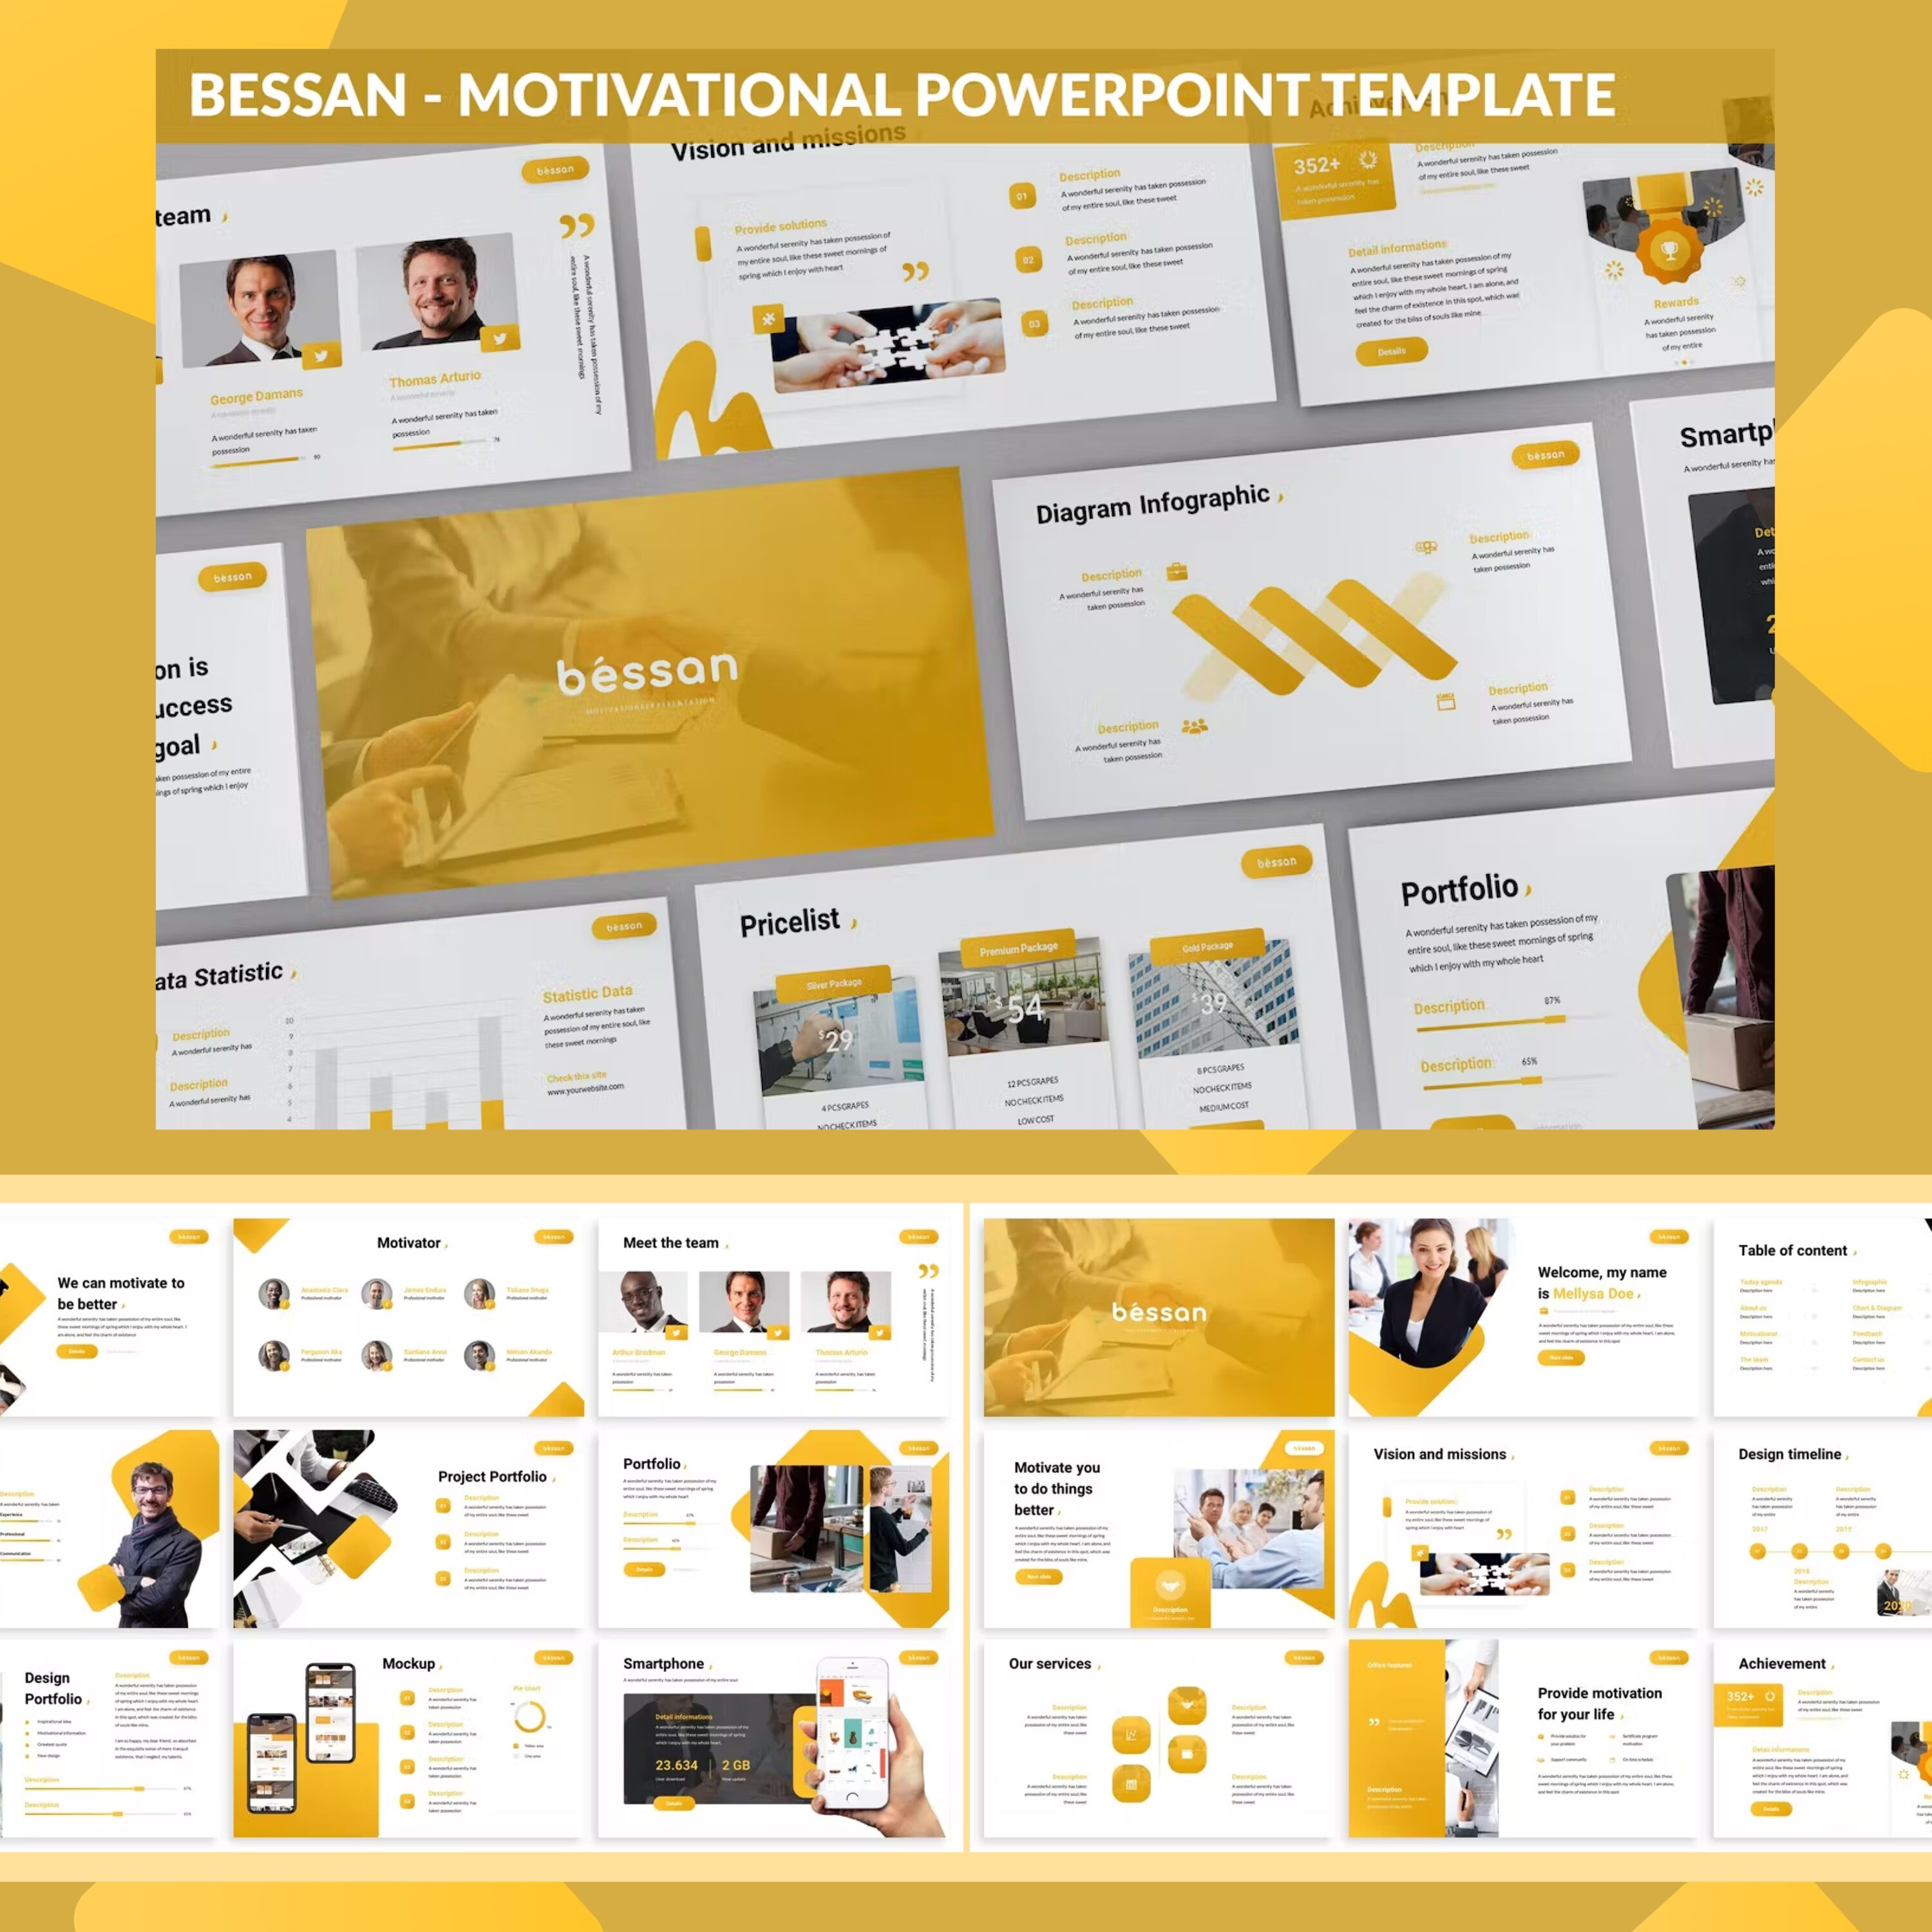 Bessan - Motivational Powerpoint Template cover.